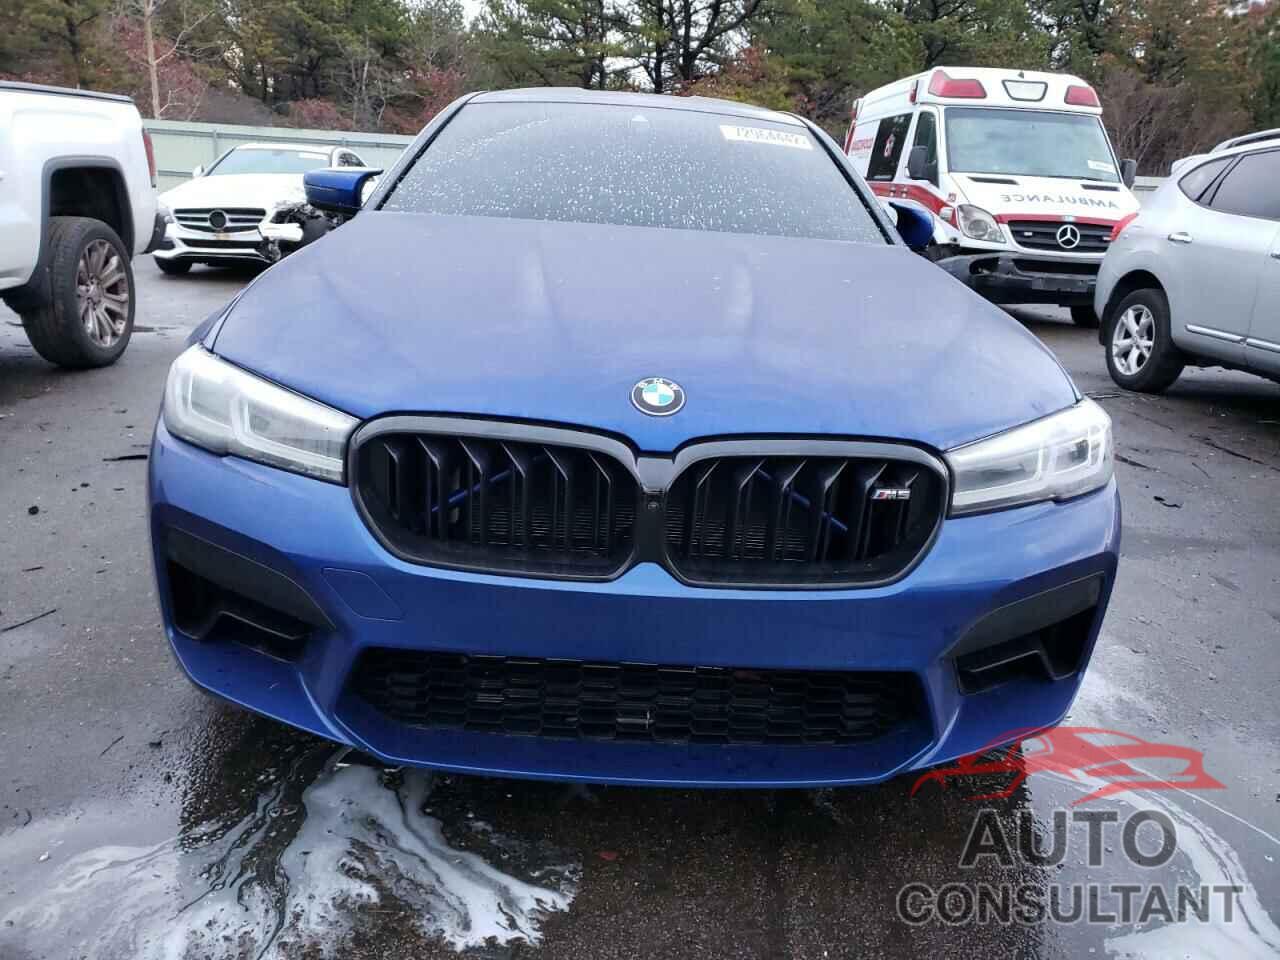 BMW M5 2021 - WBS83CH03MCG05985